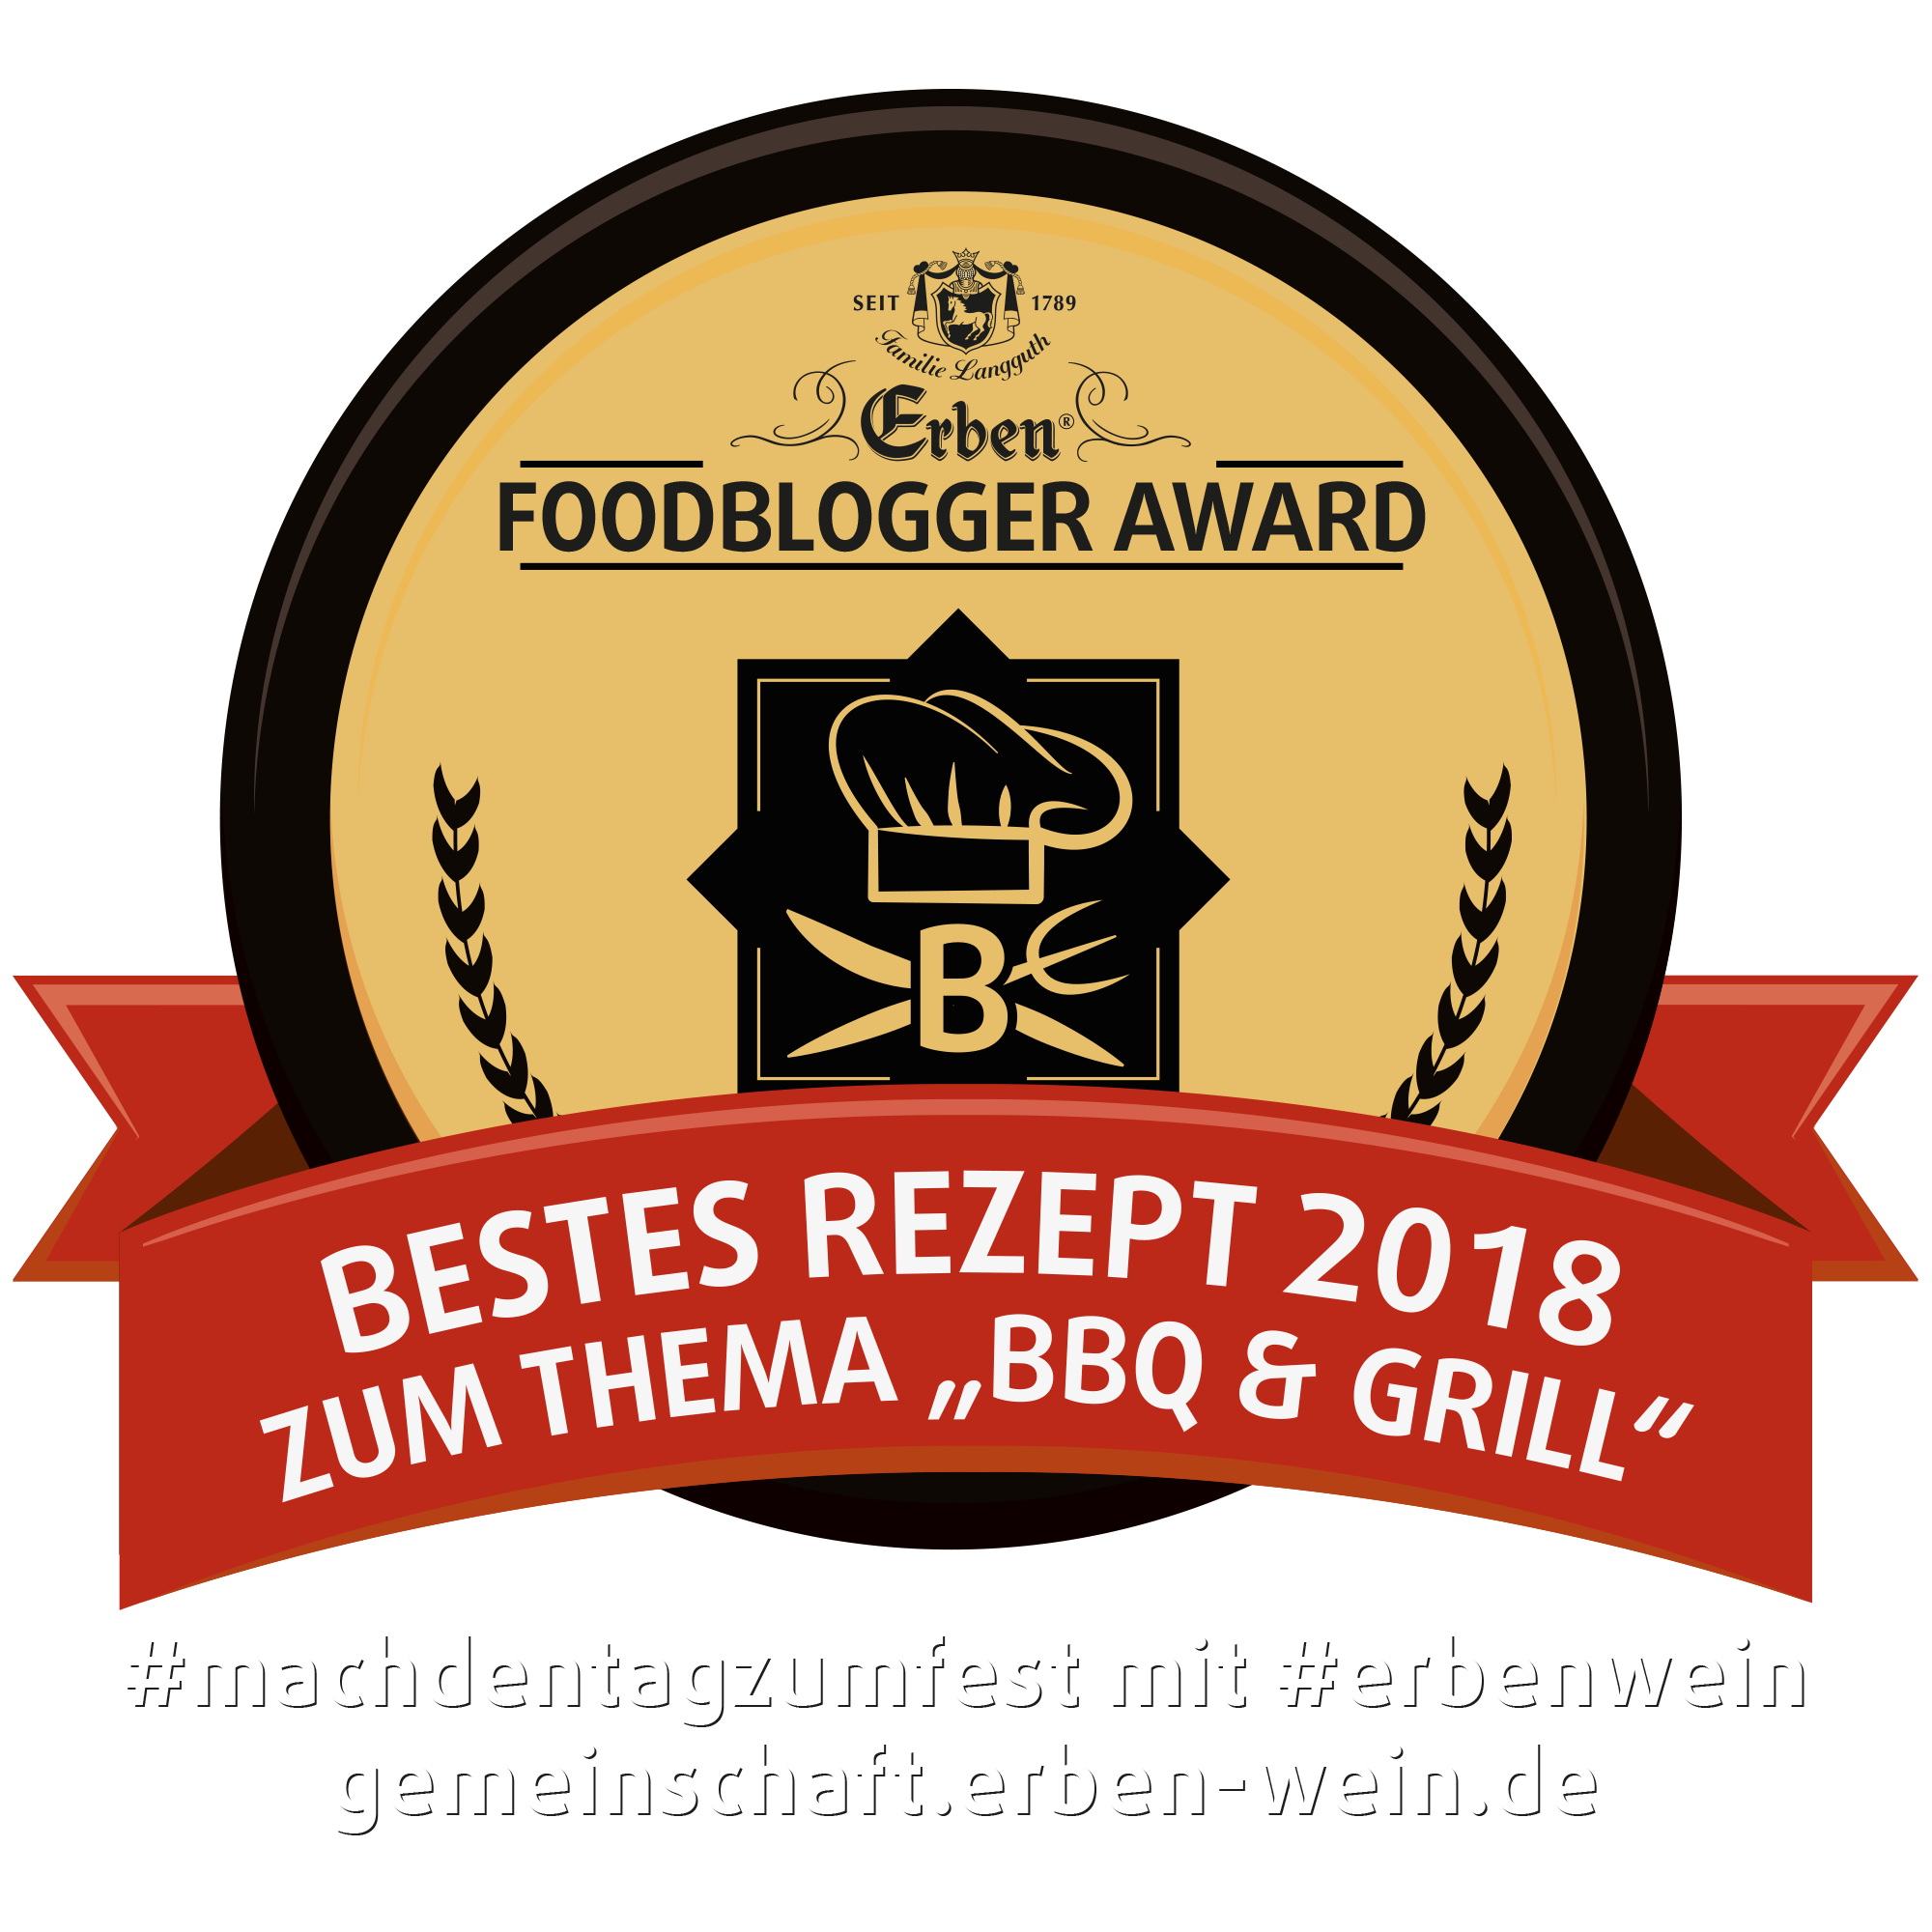 Foodblogger Award 2018